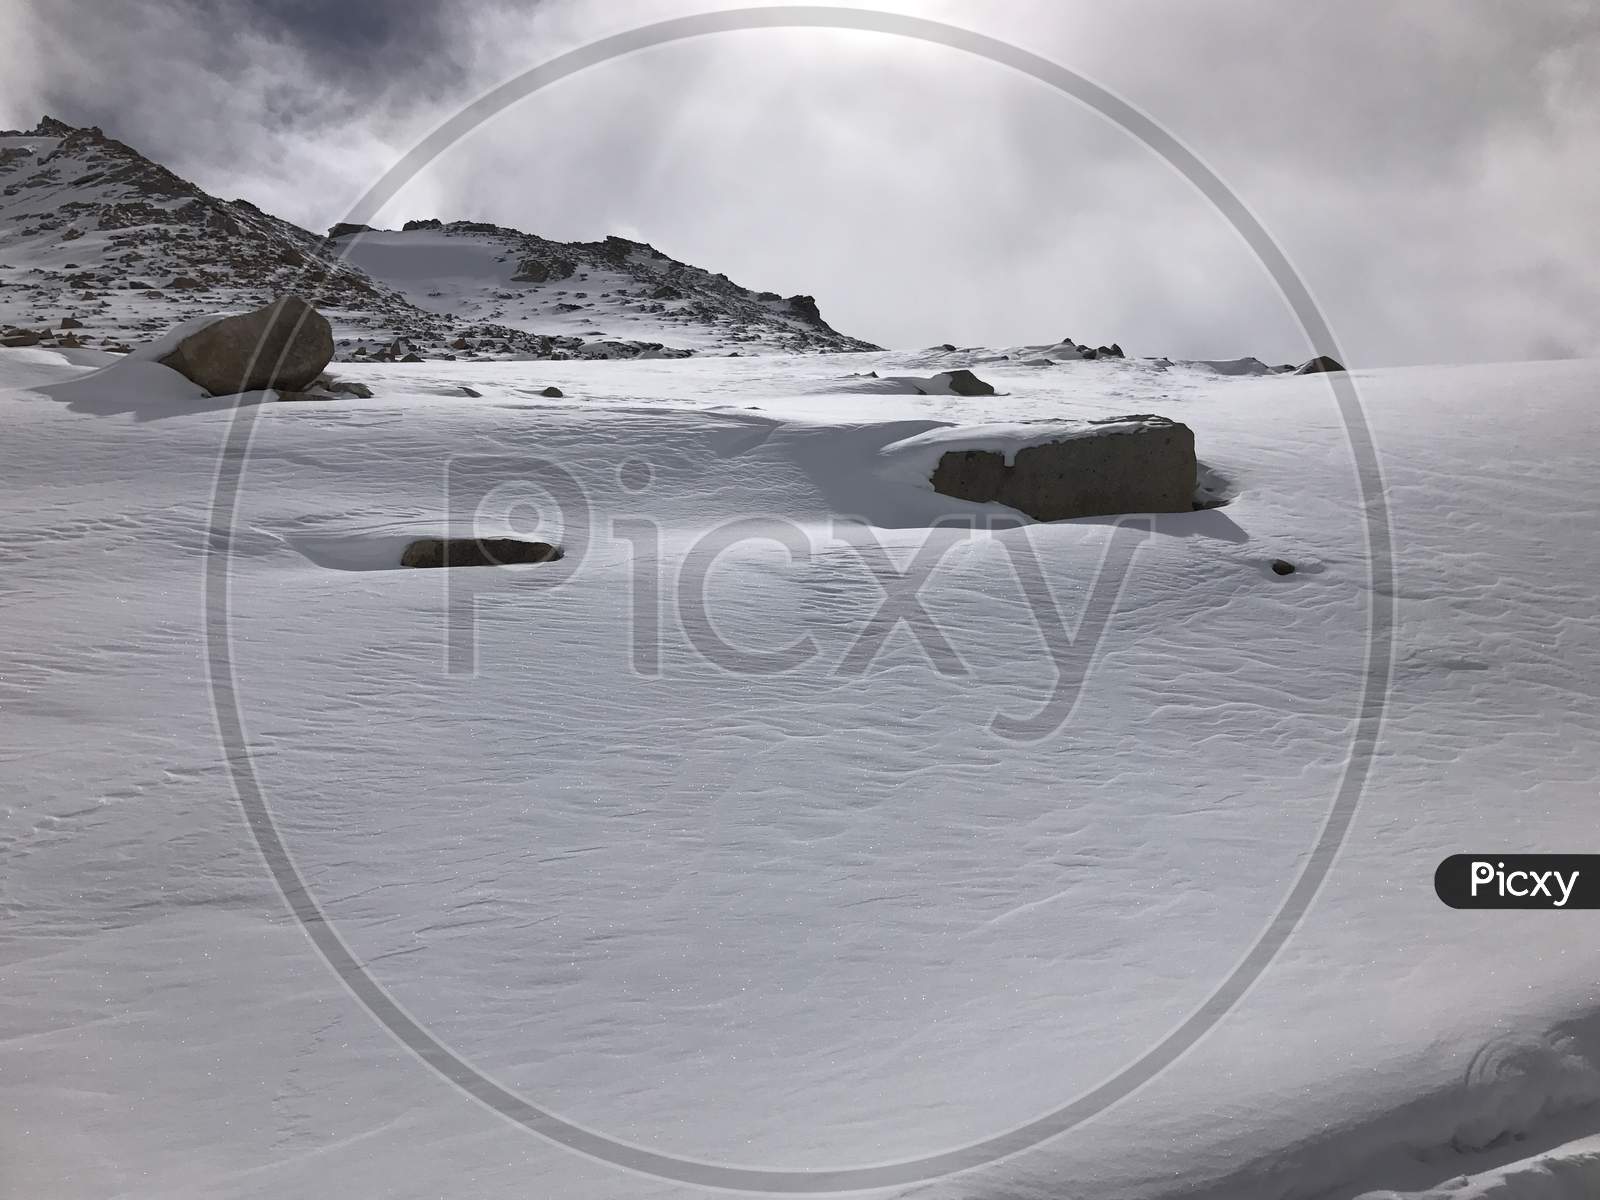 Image of snow hills in Leh ldhak UT